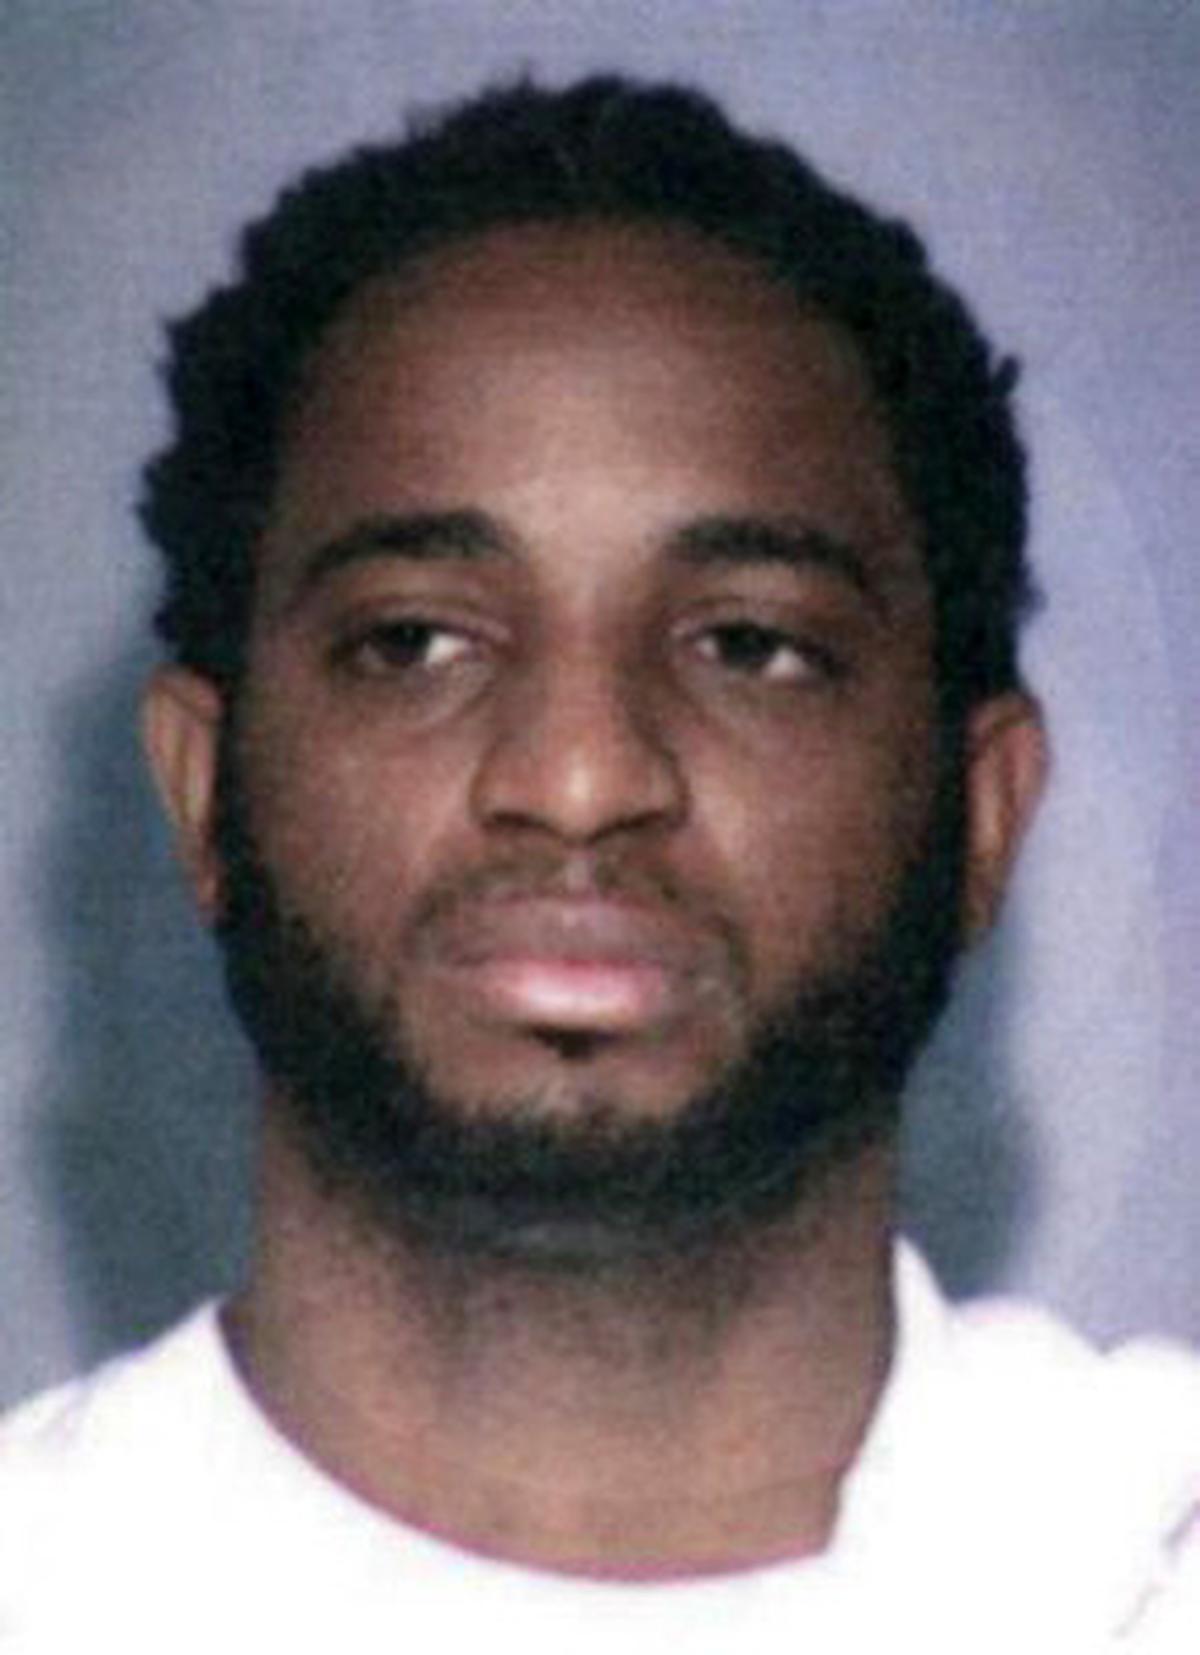 Fugitive Marlon Jones who is wanted for multiple counts of murder in Los Angeles. (FBI via AP)